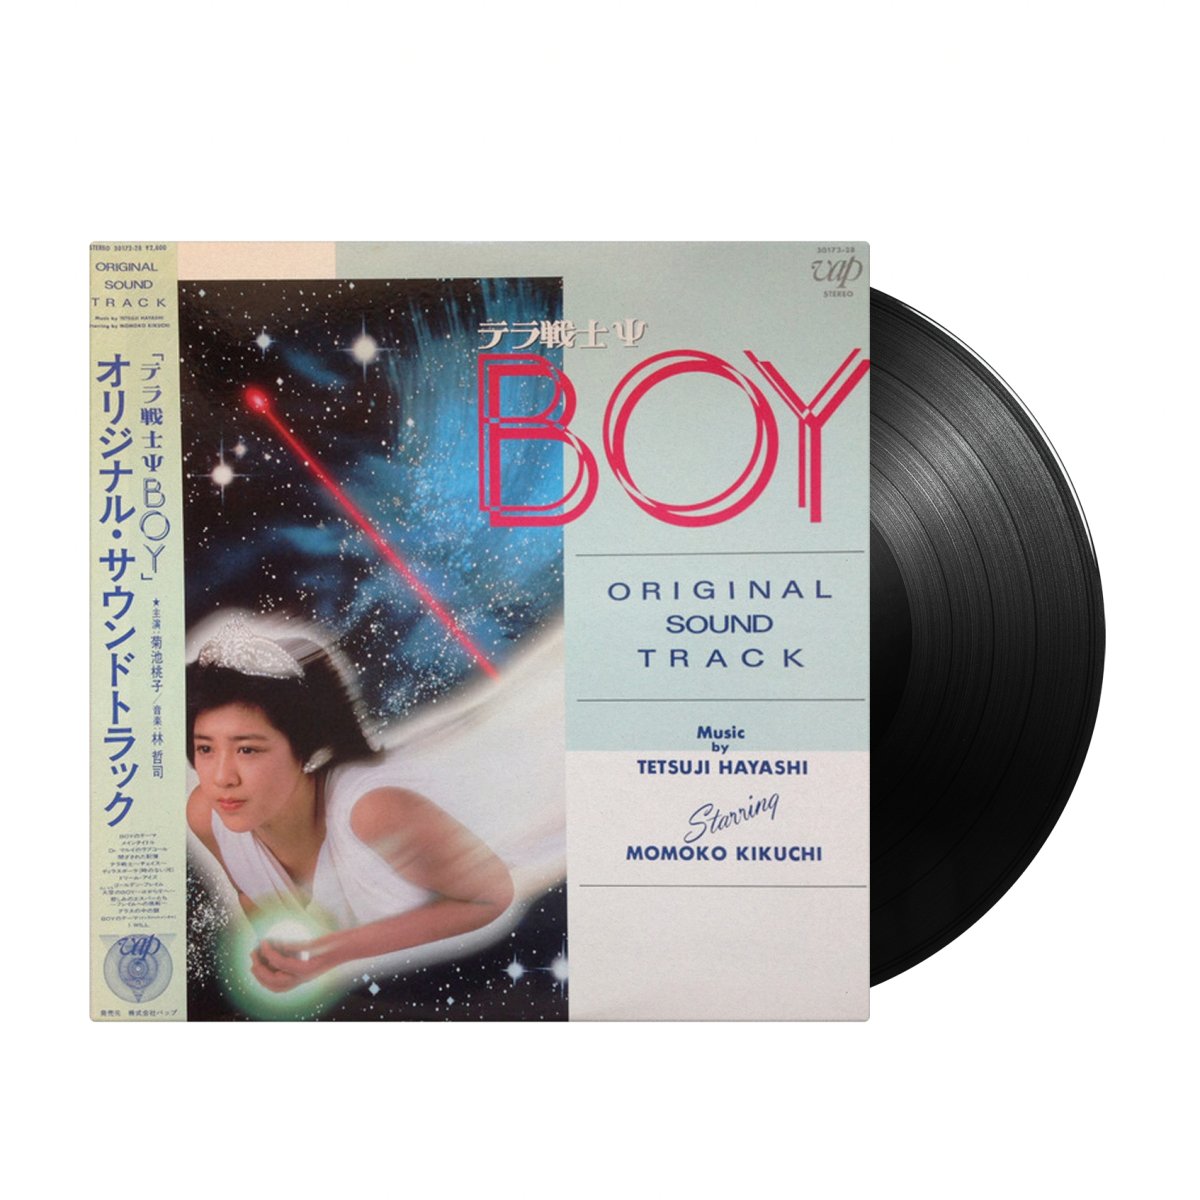 Tetsuji Hayashi Starring Momoko Kikuchi - Boy Original Sound Track (Japan Import) - Inner Ocean Records